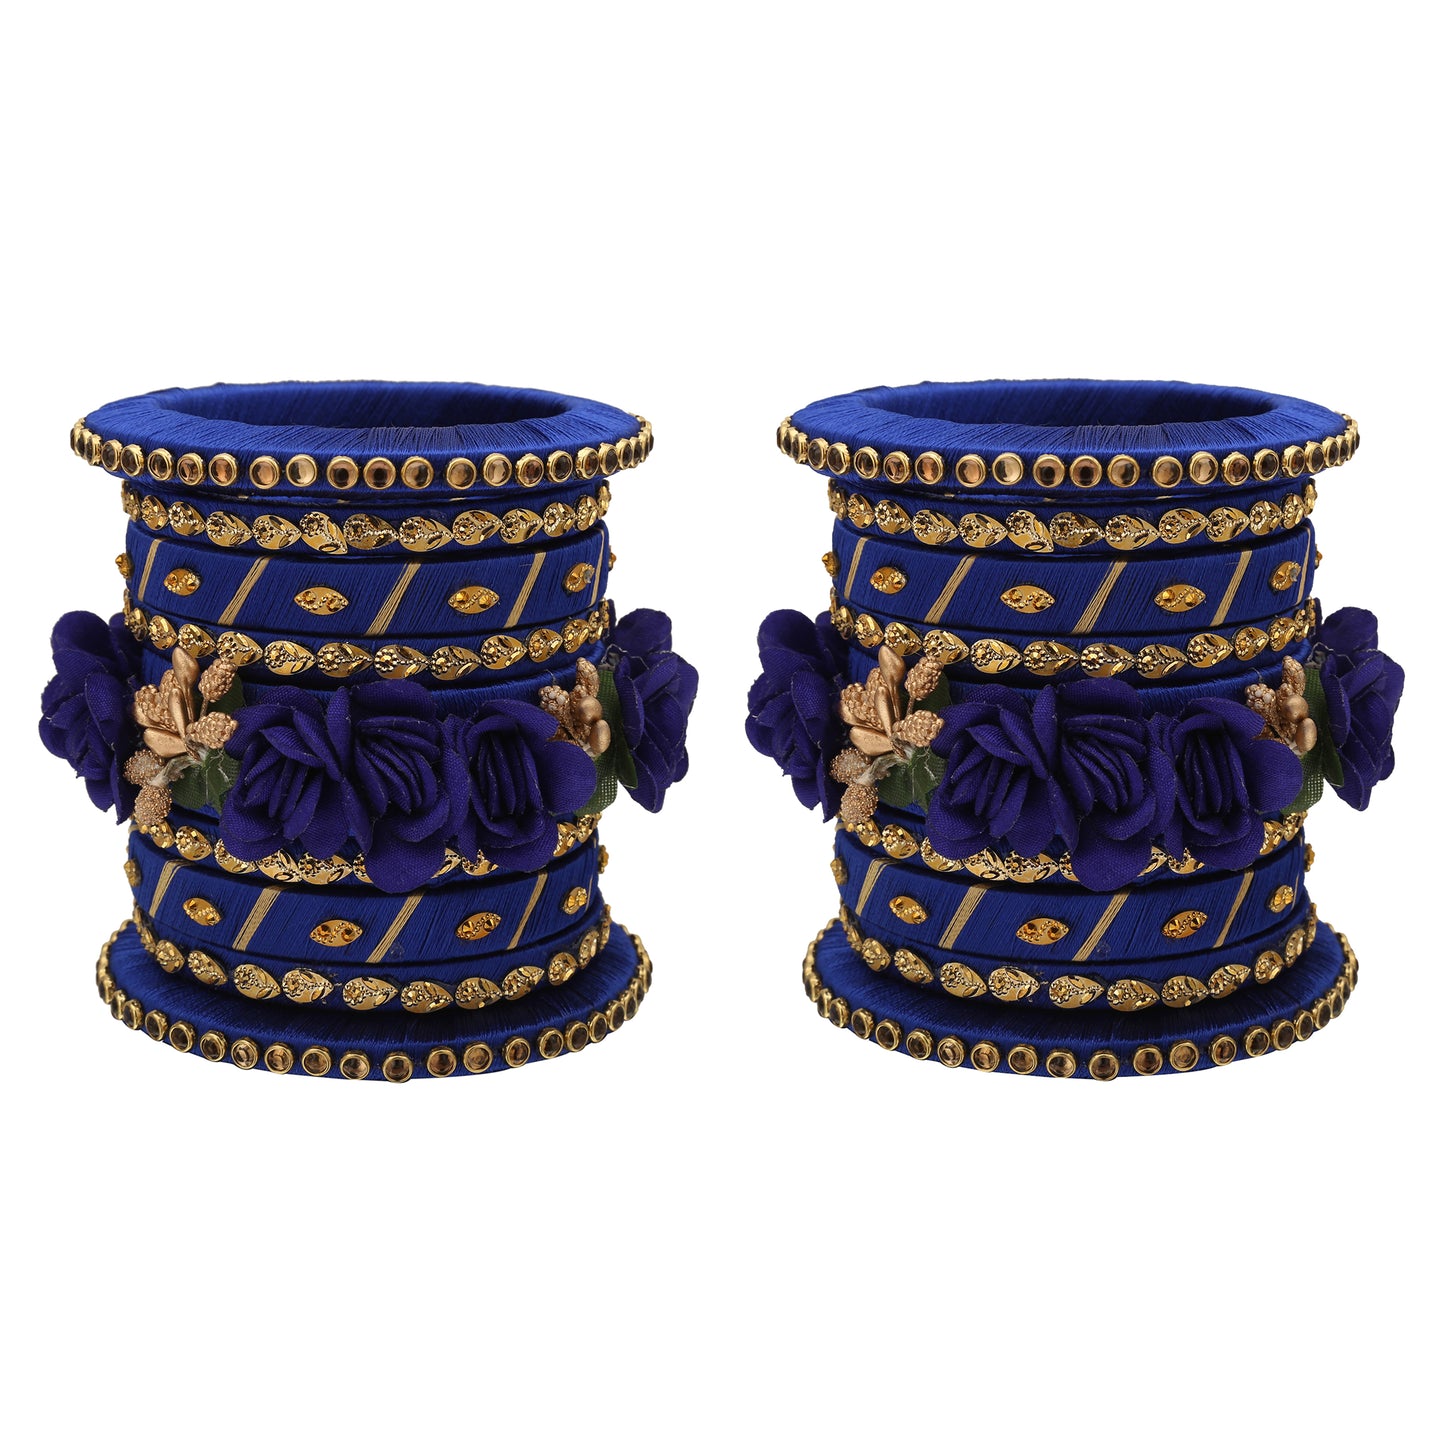 sukriti stylish handmade blue flower designer silk thread plastic bridal chuda wedding bangles for women – set of 18